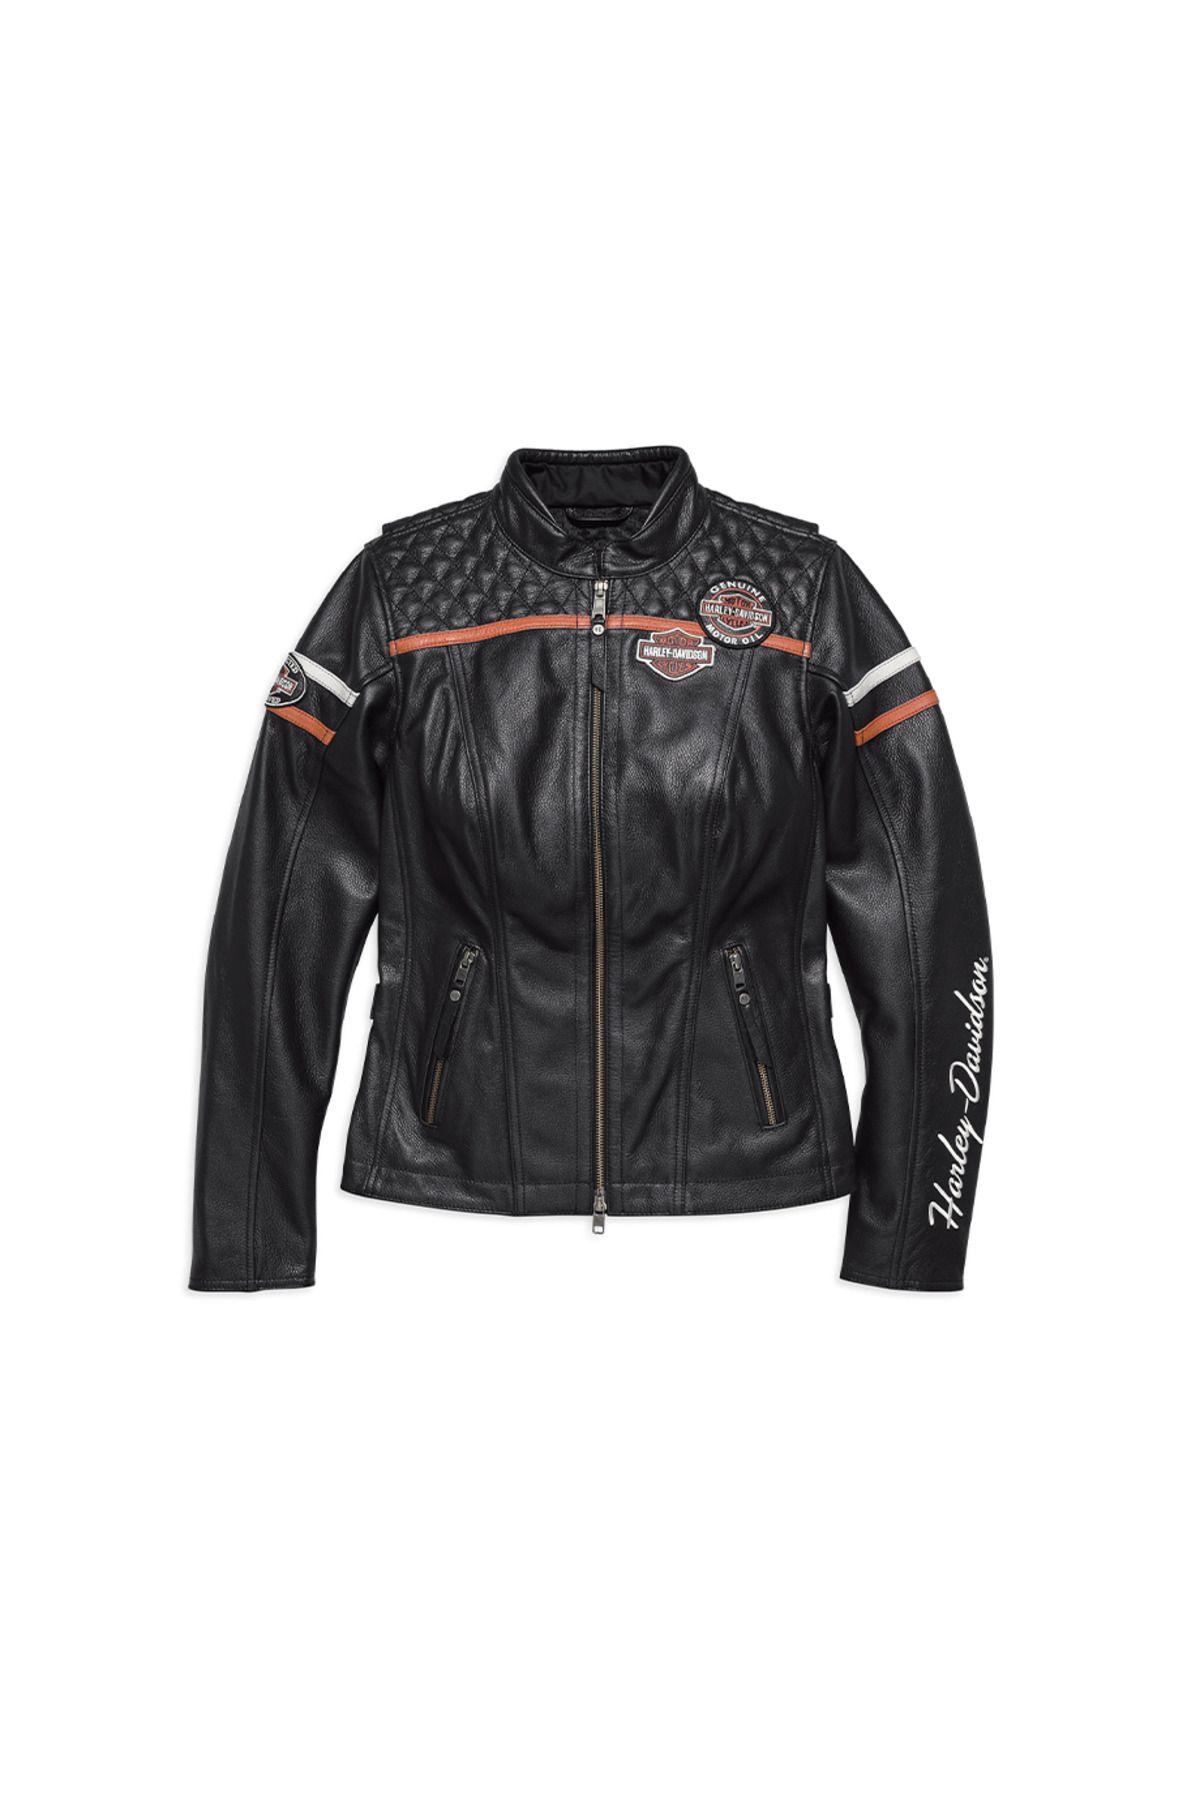 Harley Davidson Harley-davidson Jacket Gmic Miss Enthus Iast